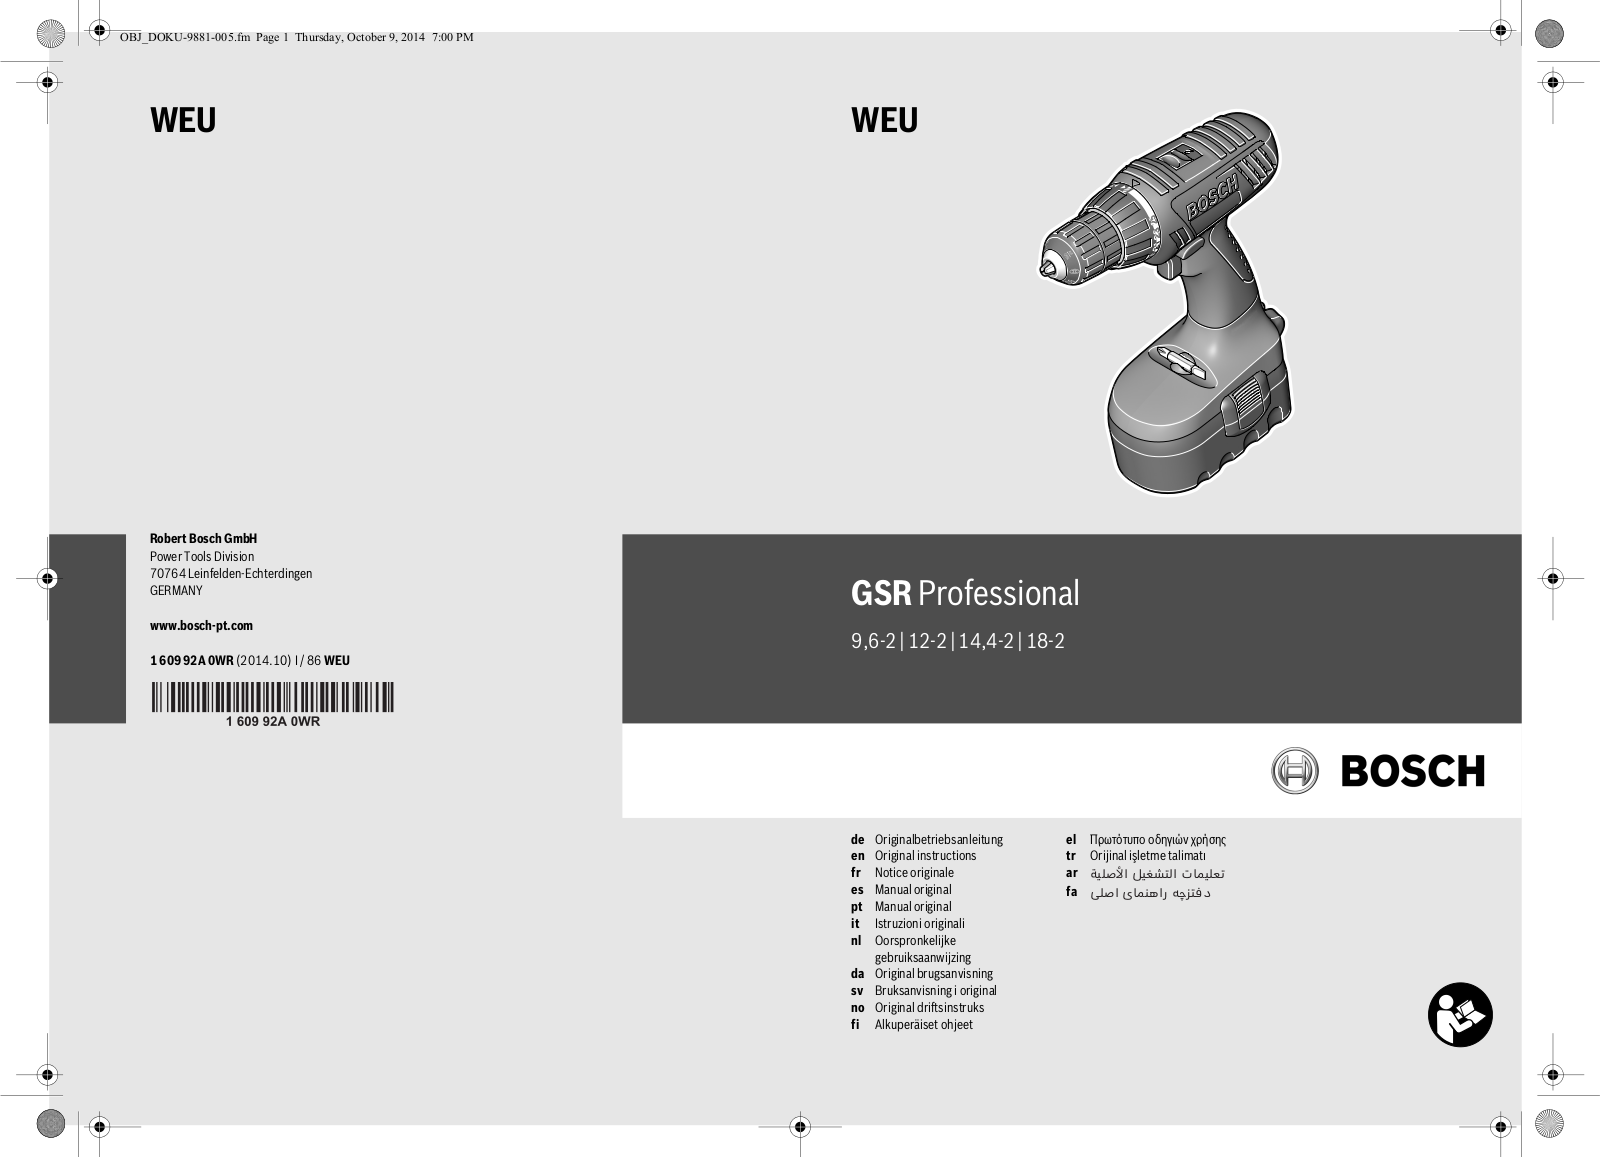 Bosch GSR Professional 9.6-2, GSR Professional 12-2, GSR Professional 14.4-2, GSR Professional 18-2 Original Instructions Manual